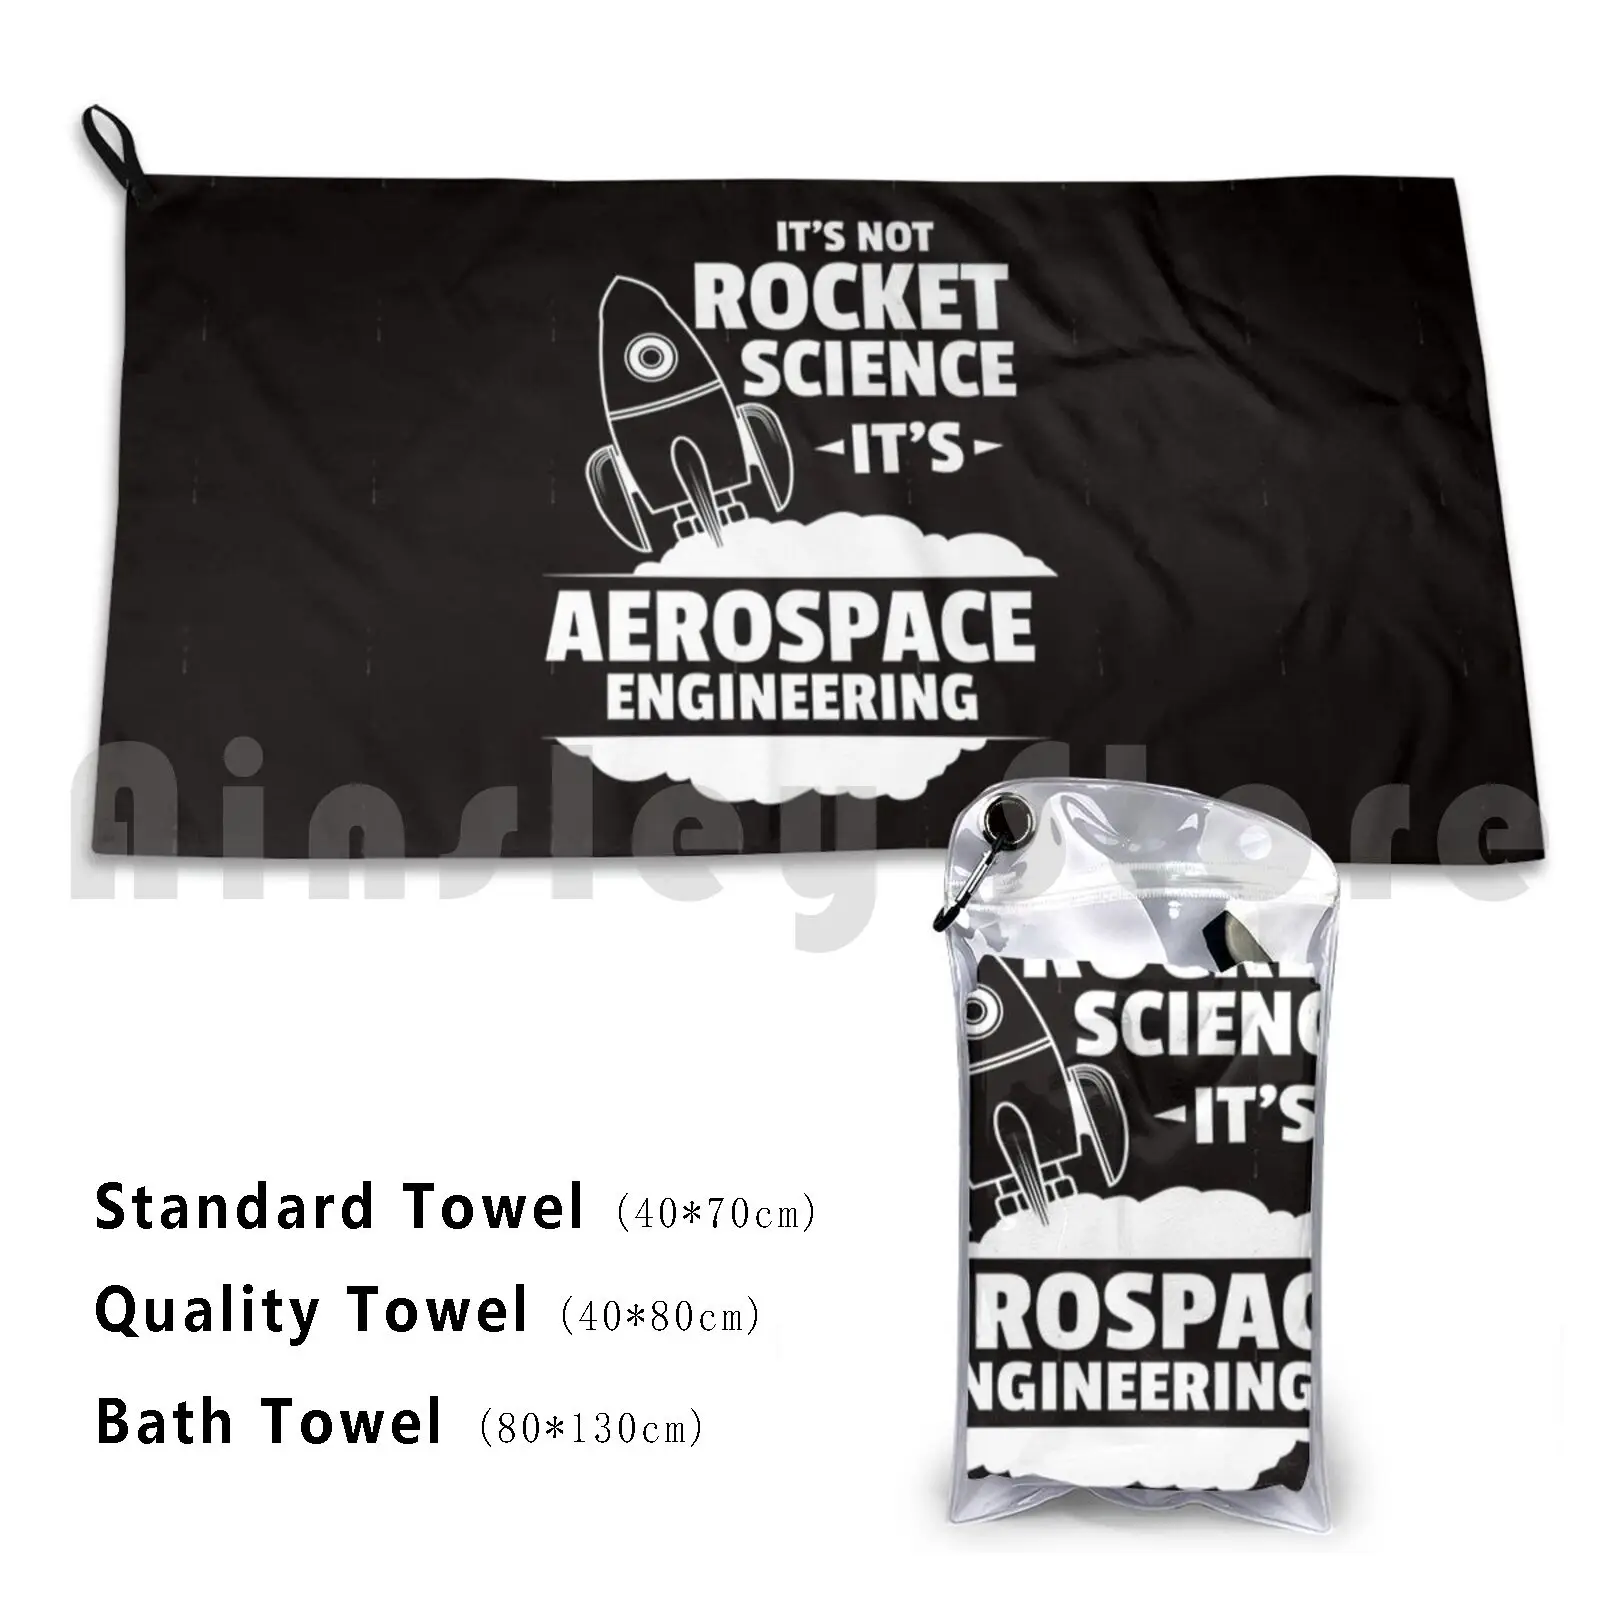 

Aerospace Engineer Shirt It's Not Rocket Science Bath Towel Beach Cushion Rocketship Spaceship Rocket Space